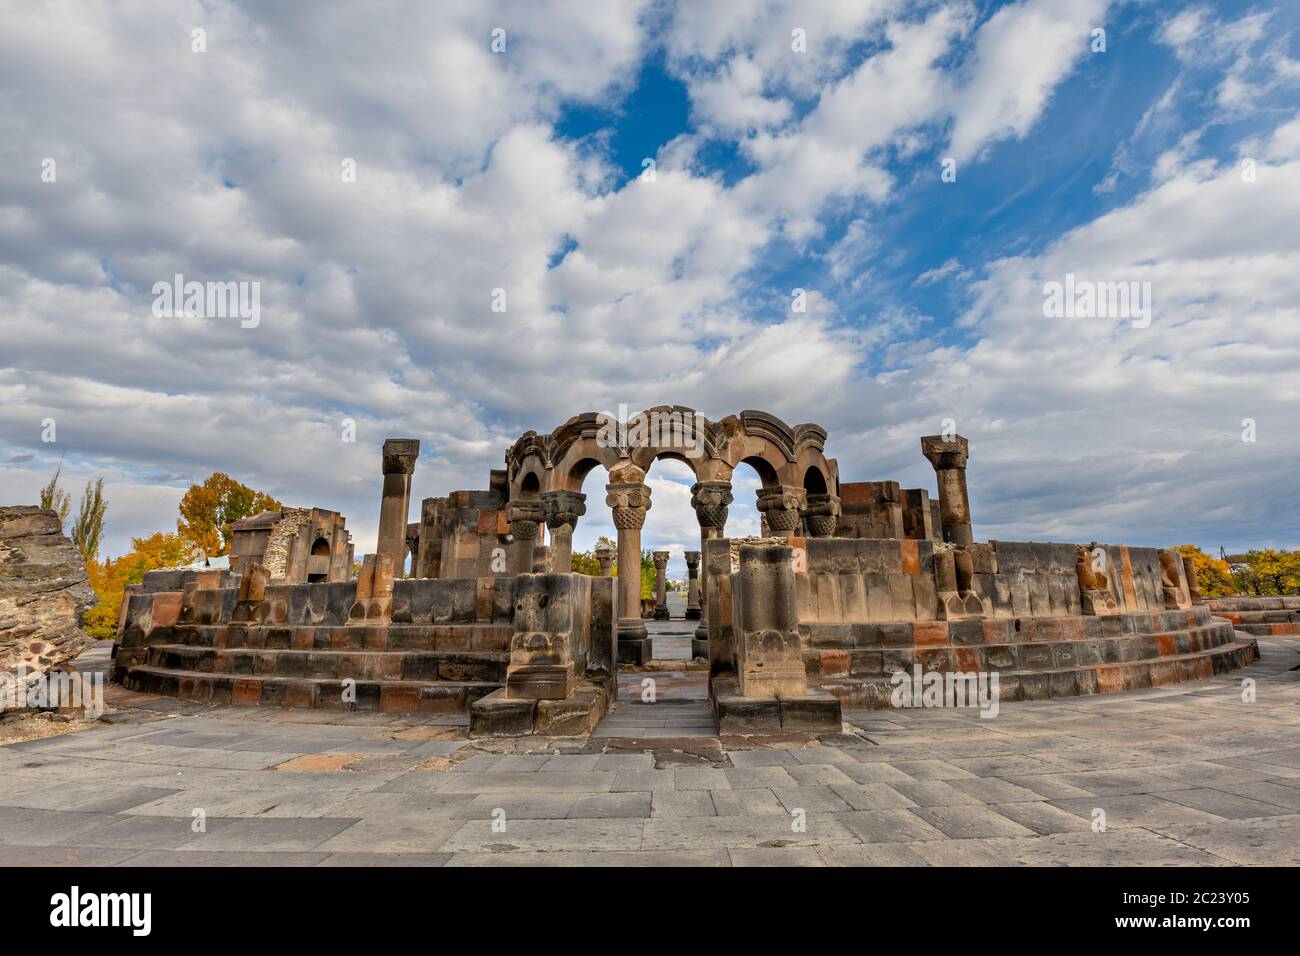 Ruins of the Temple of Zvartnots near Yerevan, Armenia. Stock Photo